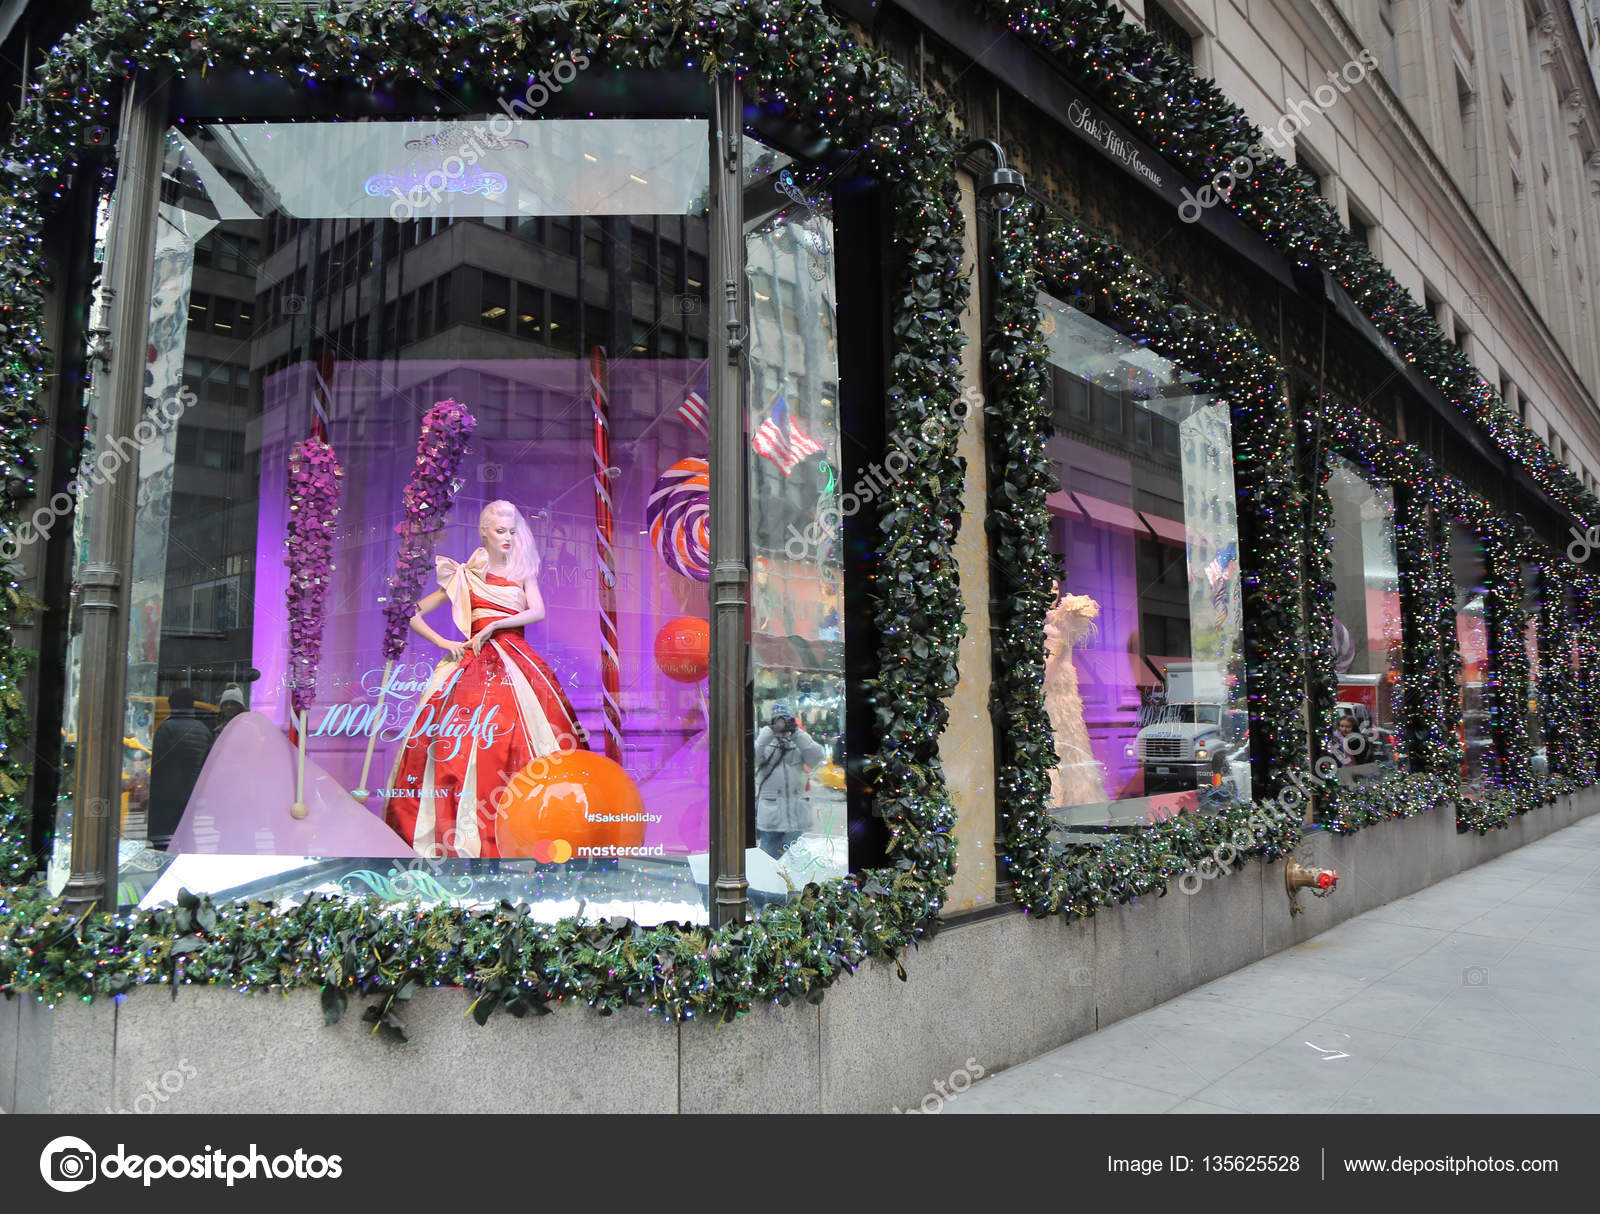 Louis Vuitton Holidays window display at Sacks Fifth Avenue luxury